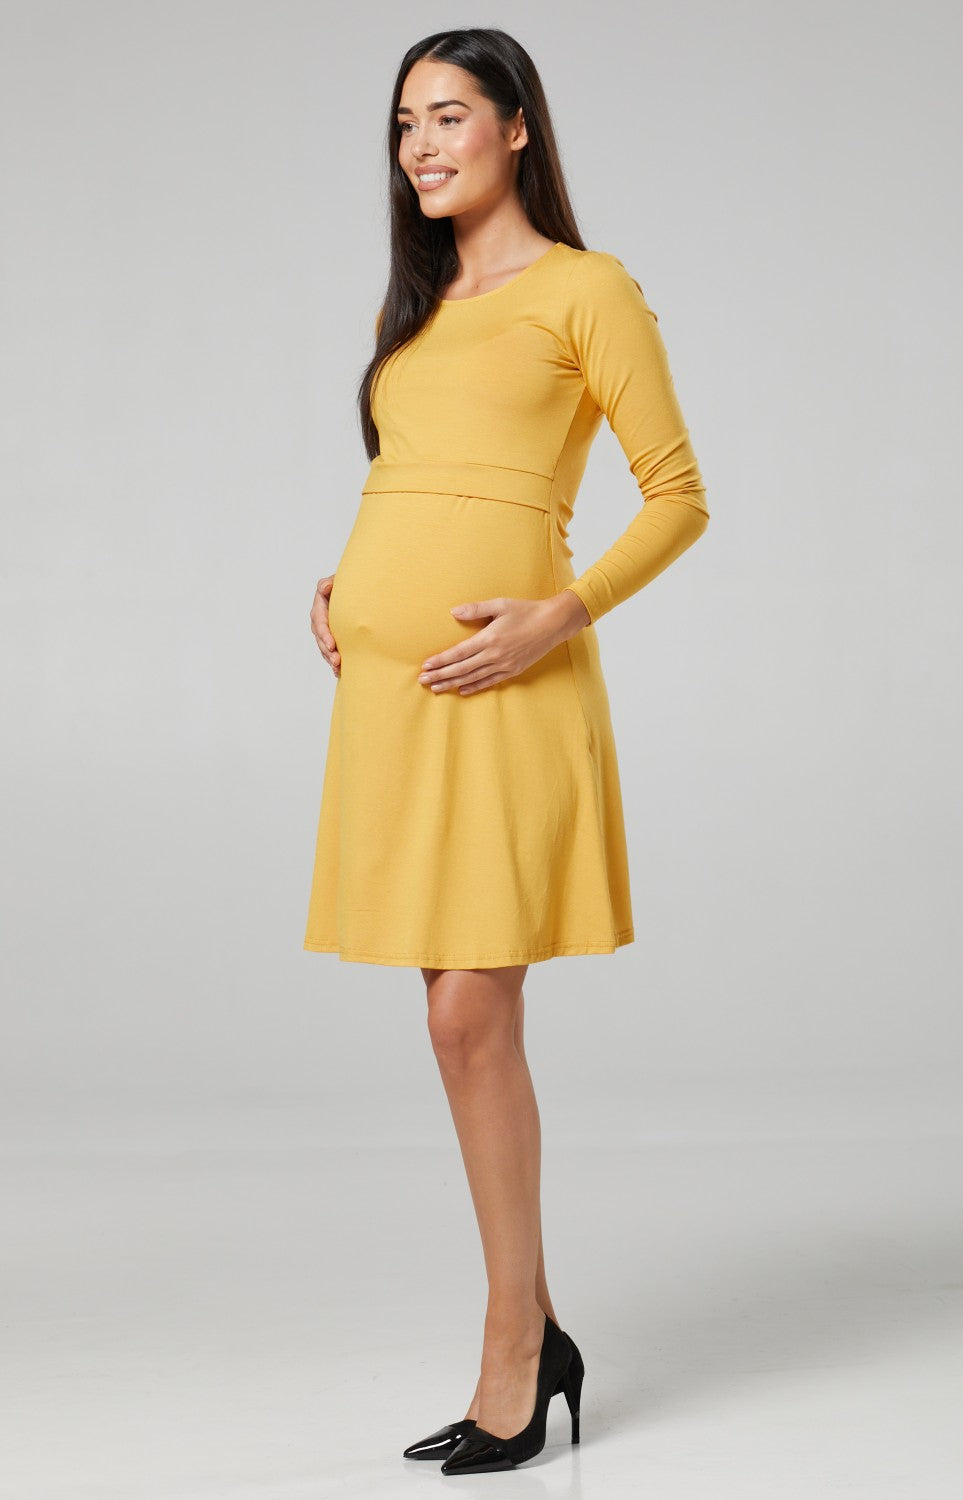 Maternity Nursing Layer Dress